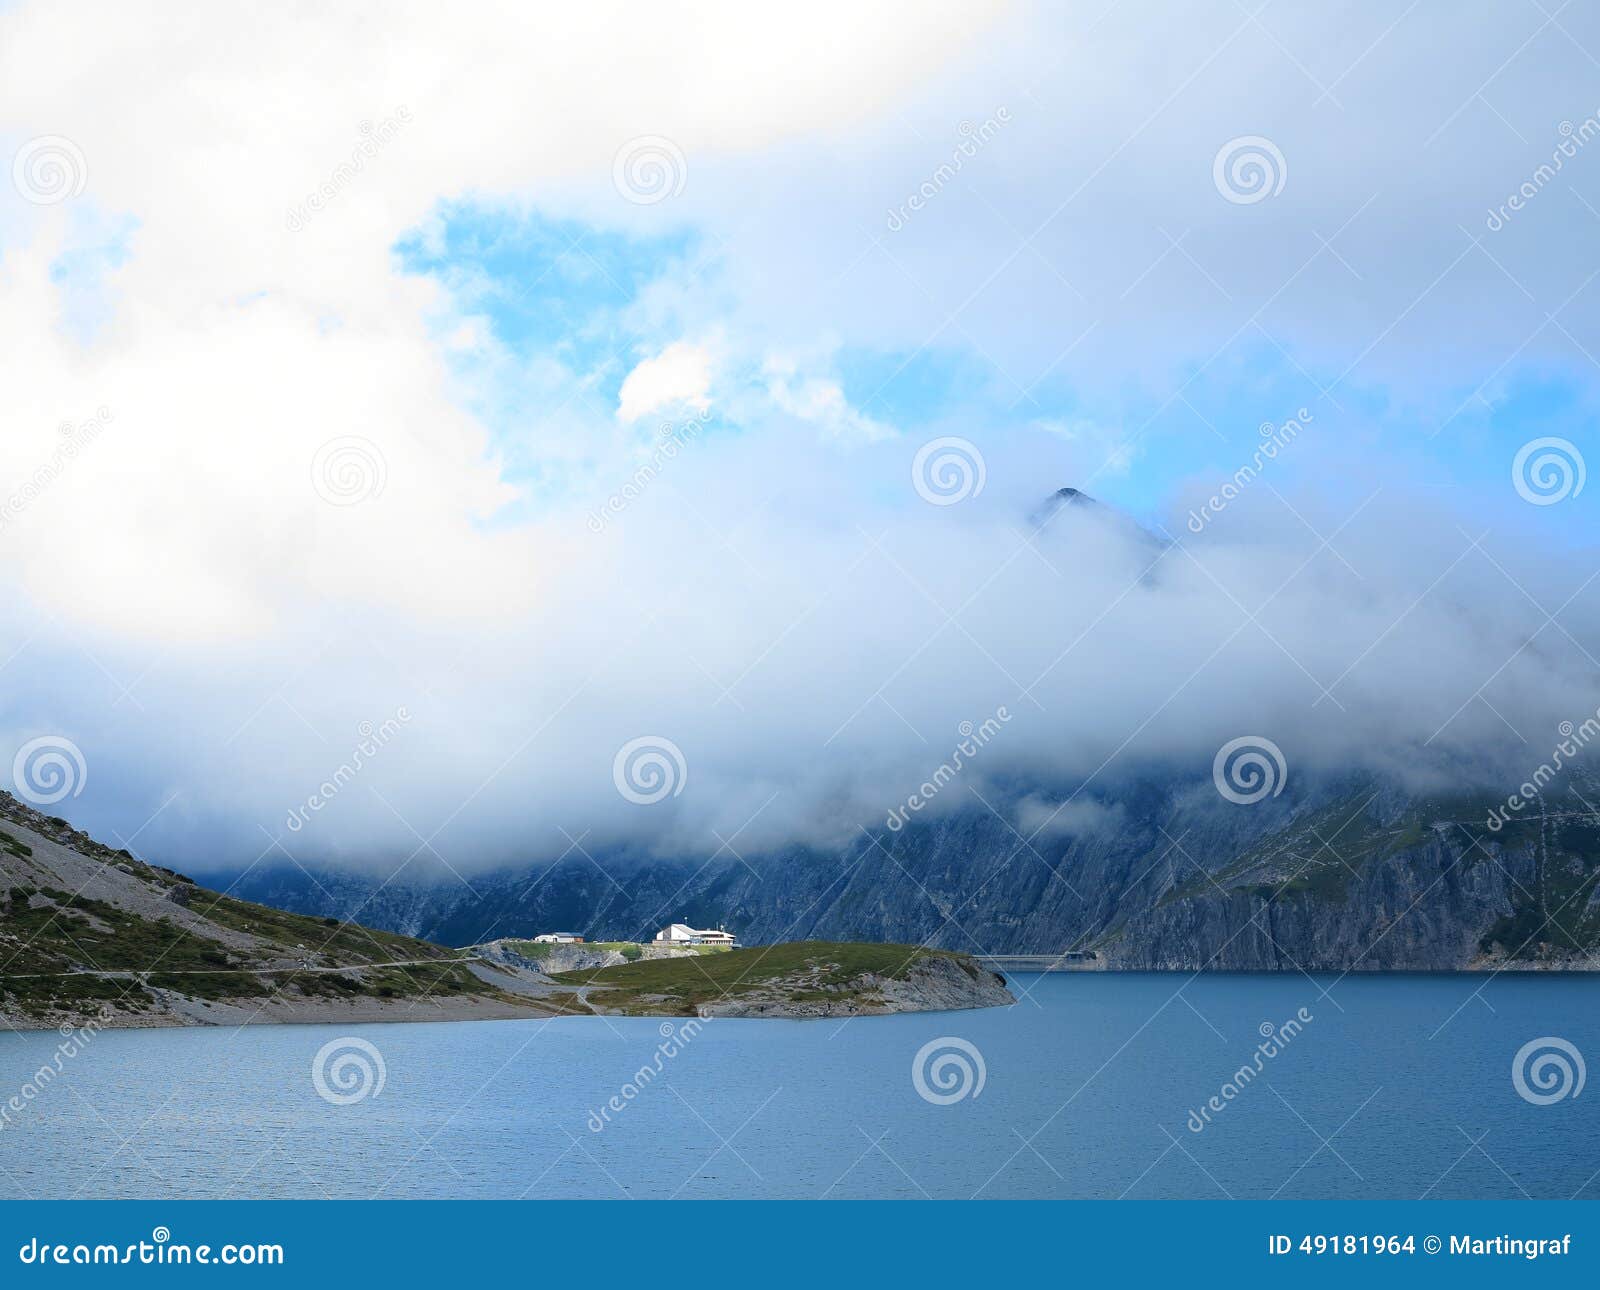 dammed mountain lake high alpine landscape in clouds